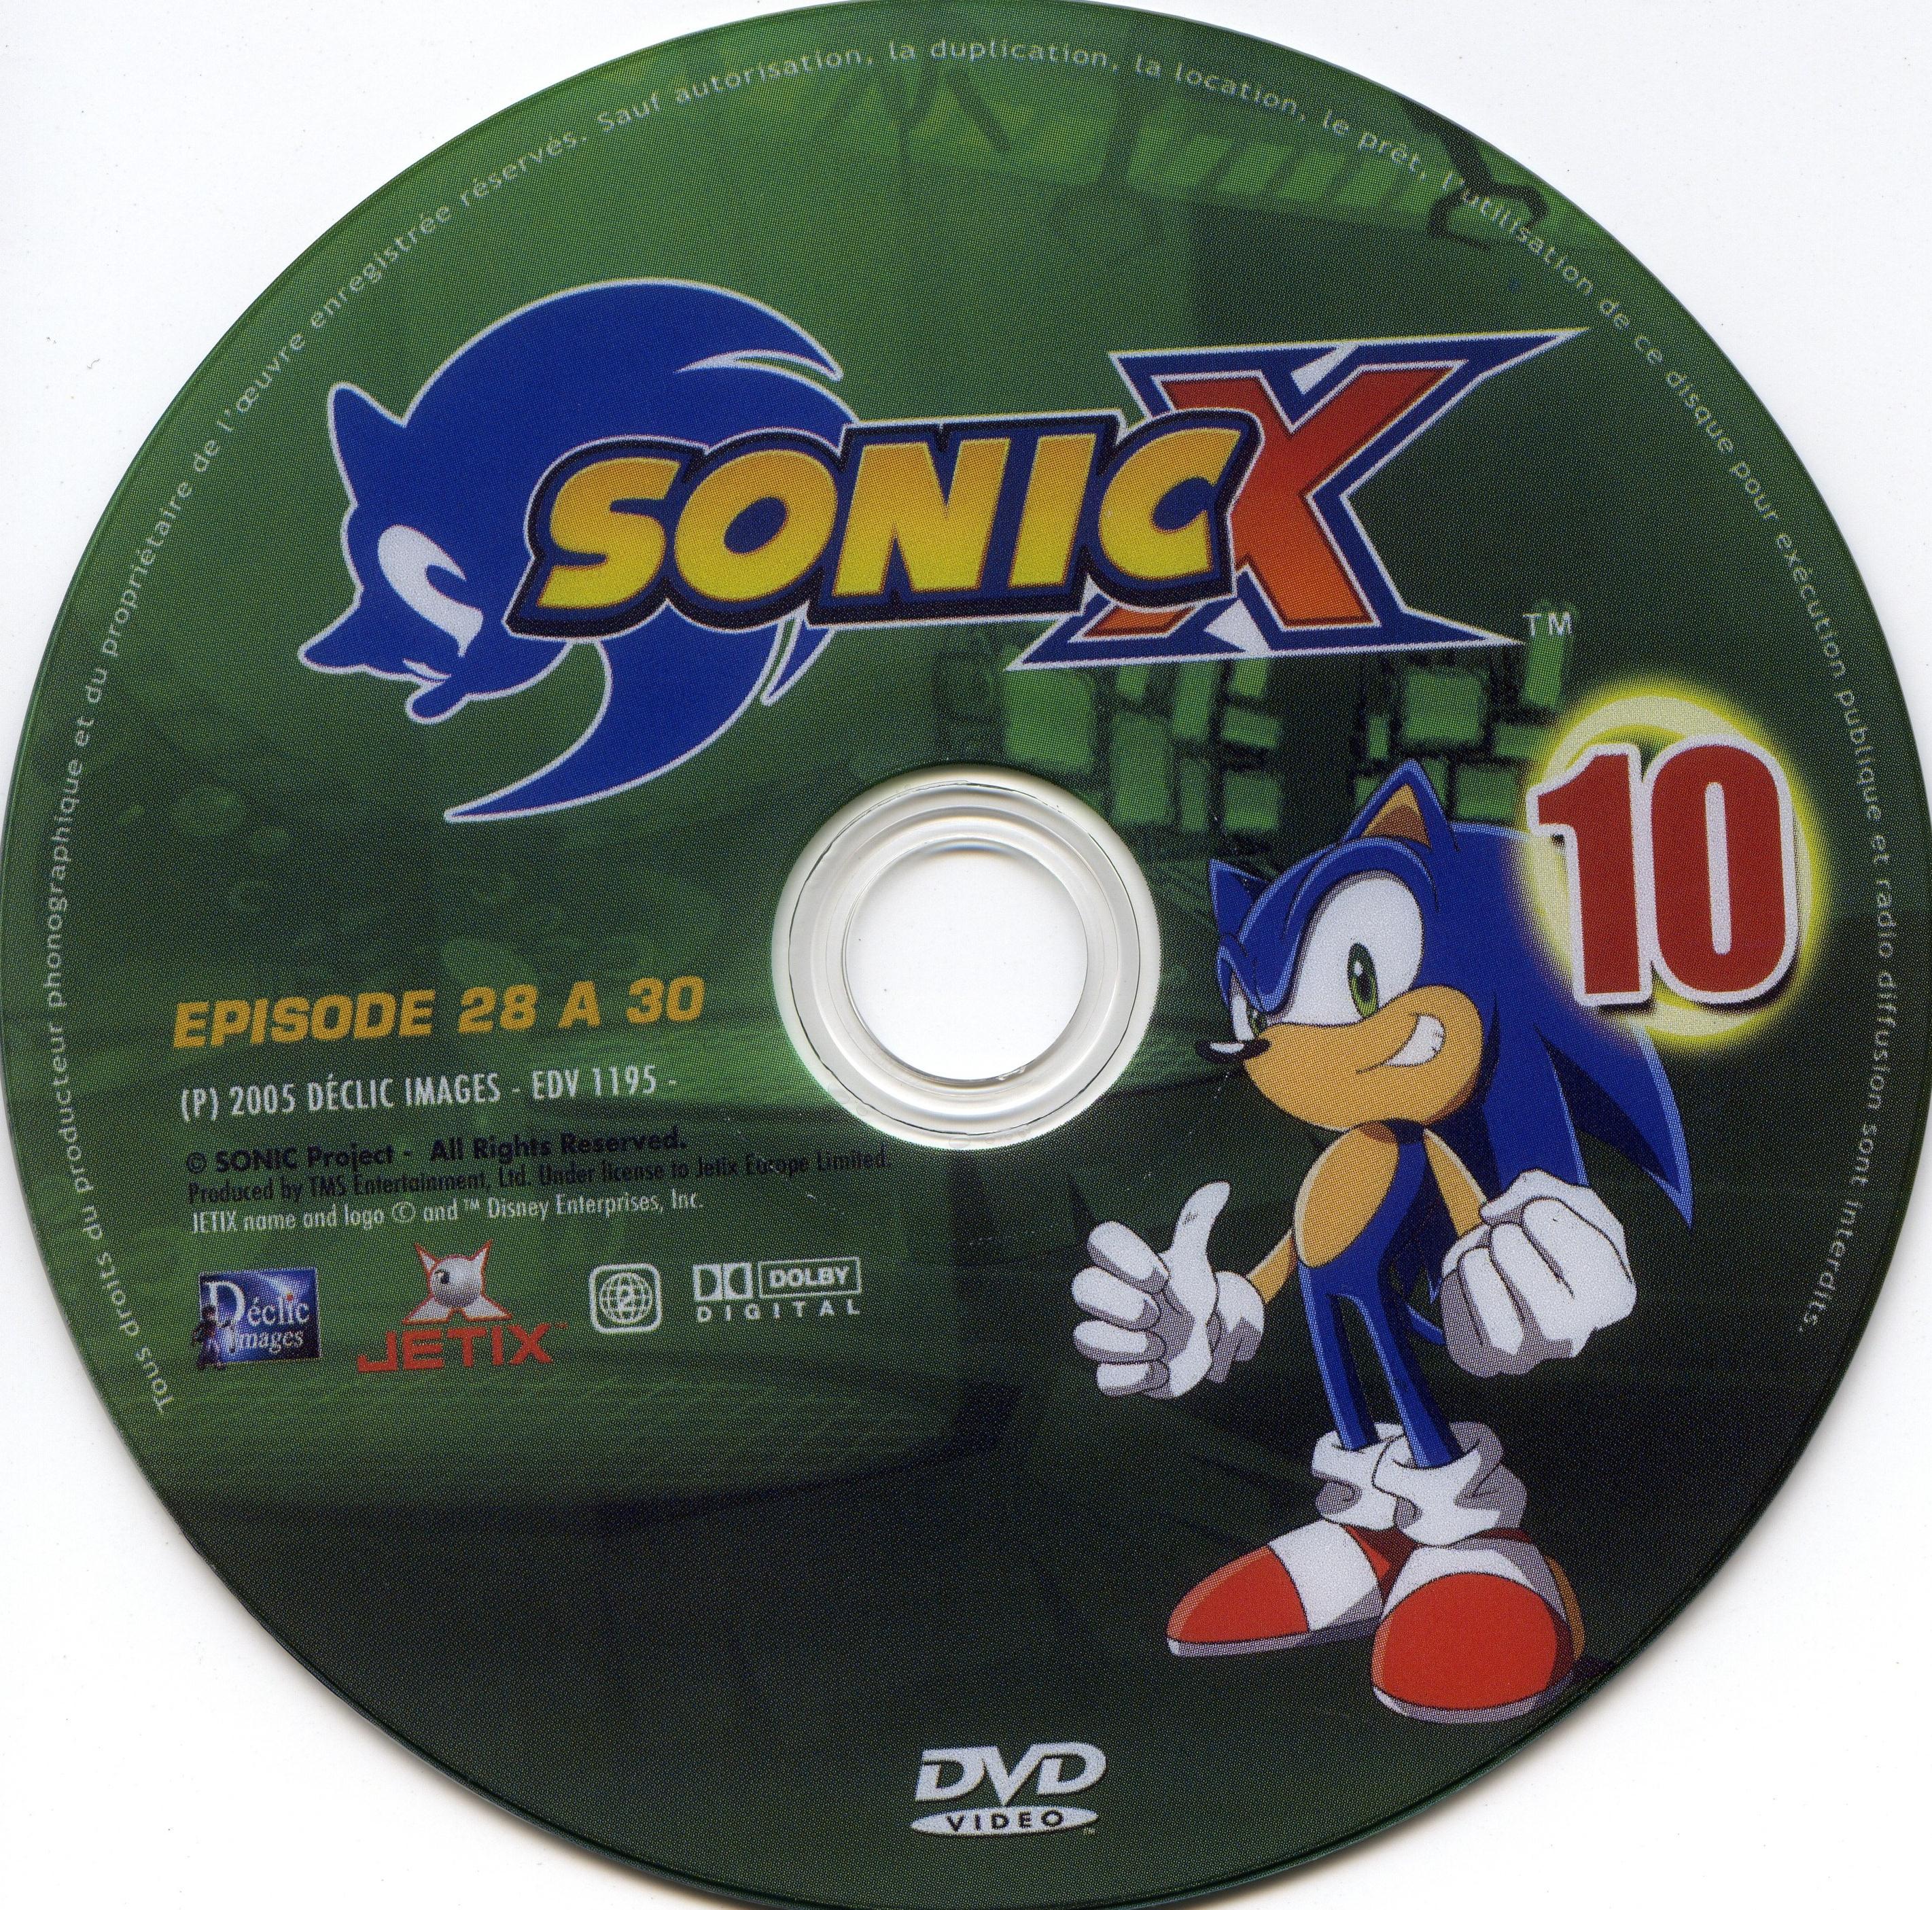 Sonic X vol 10